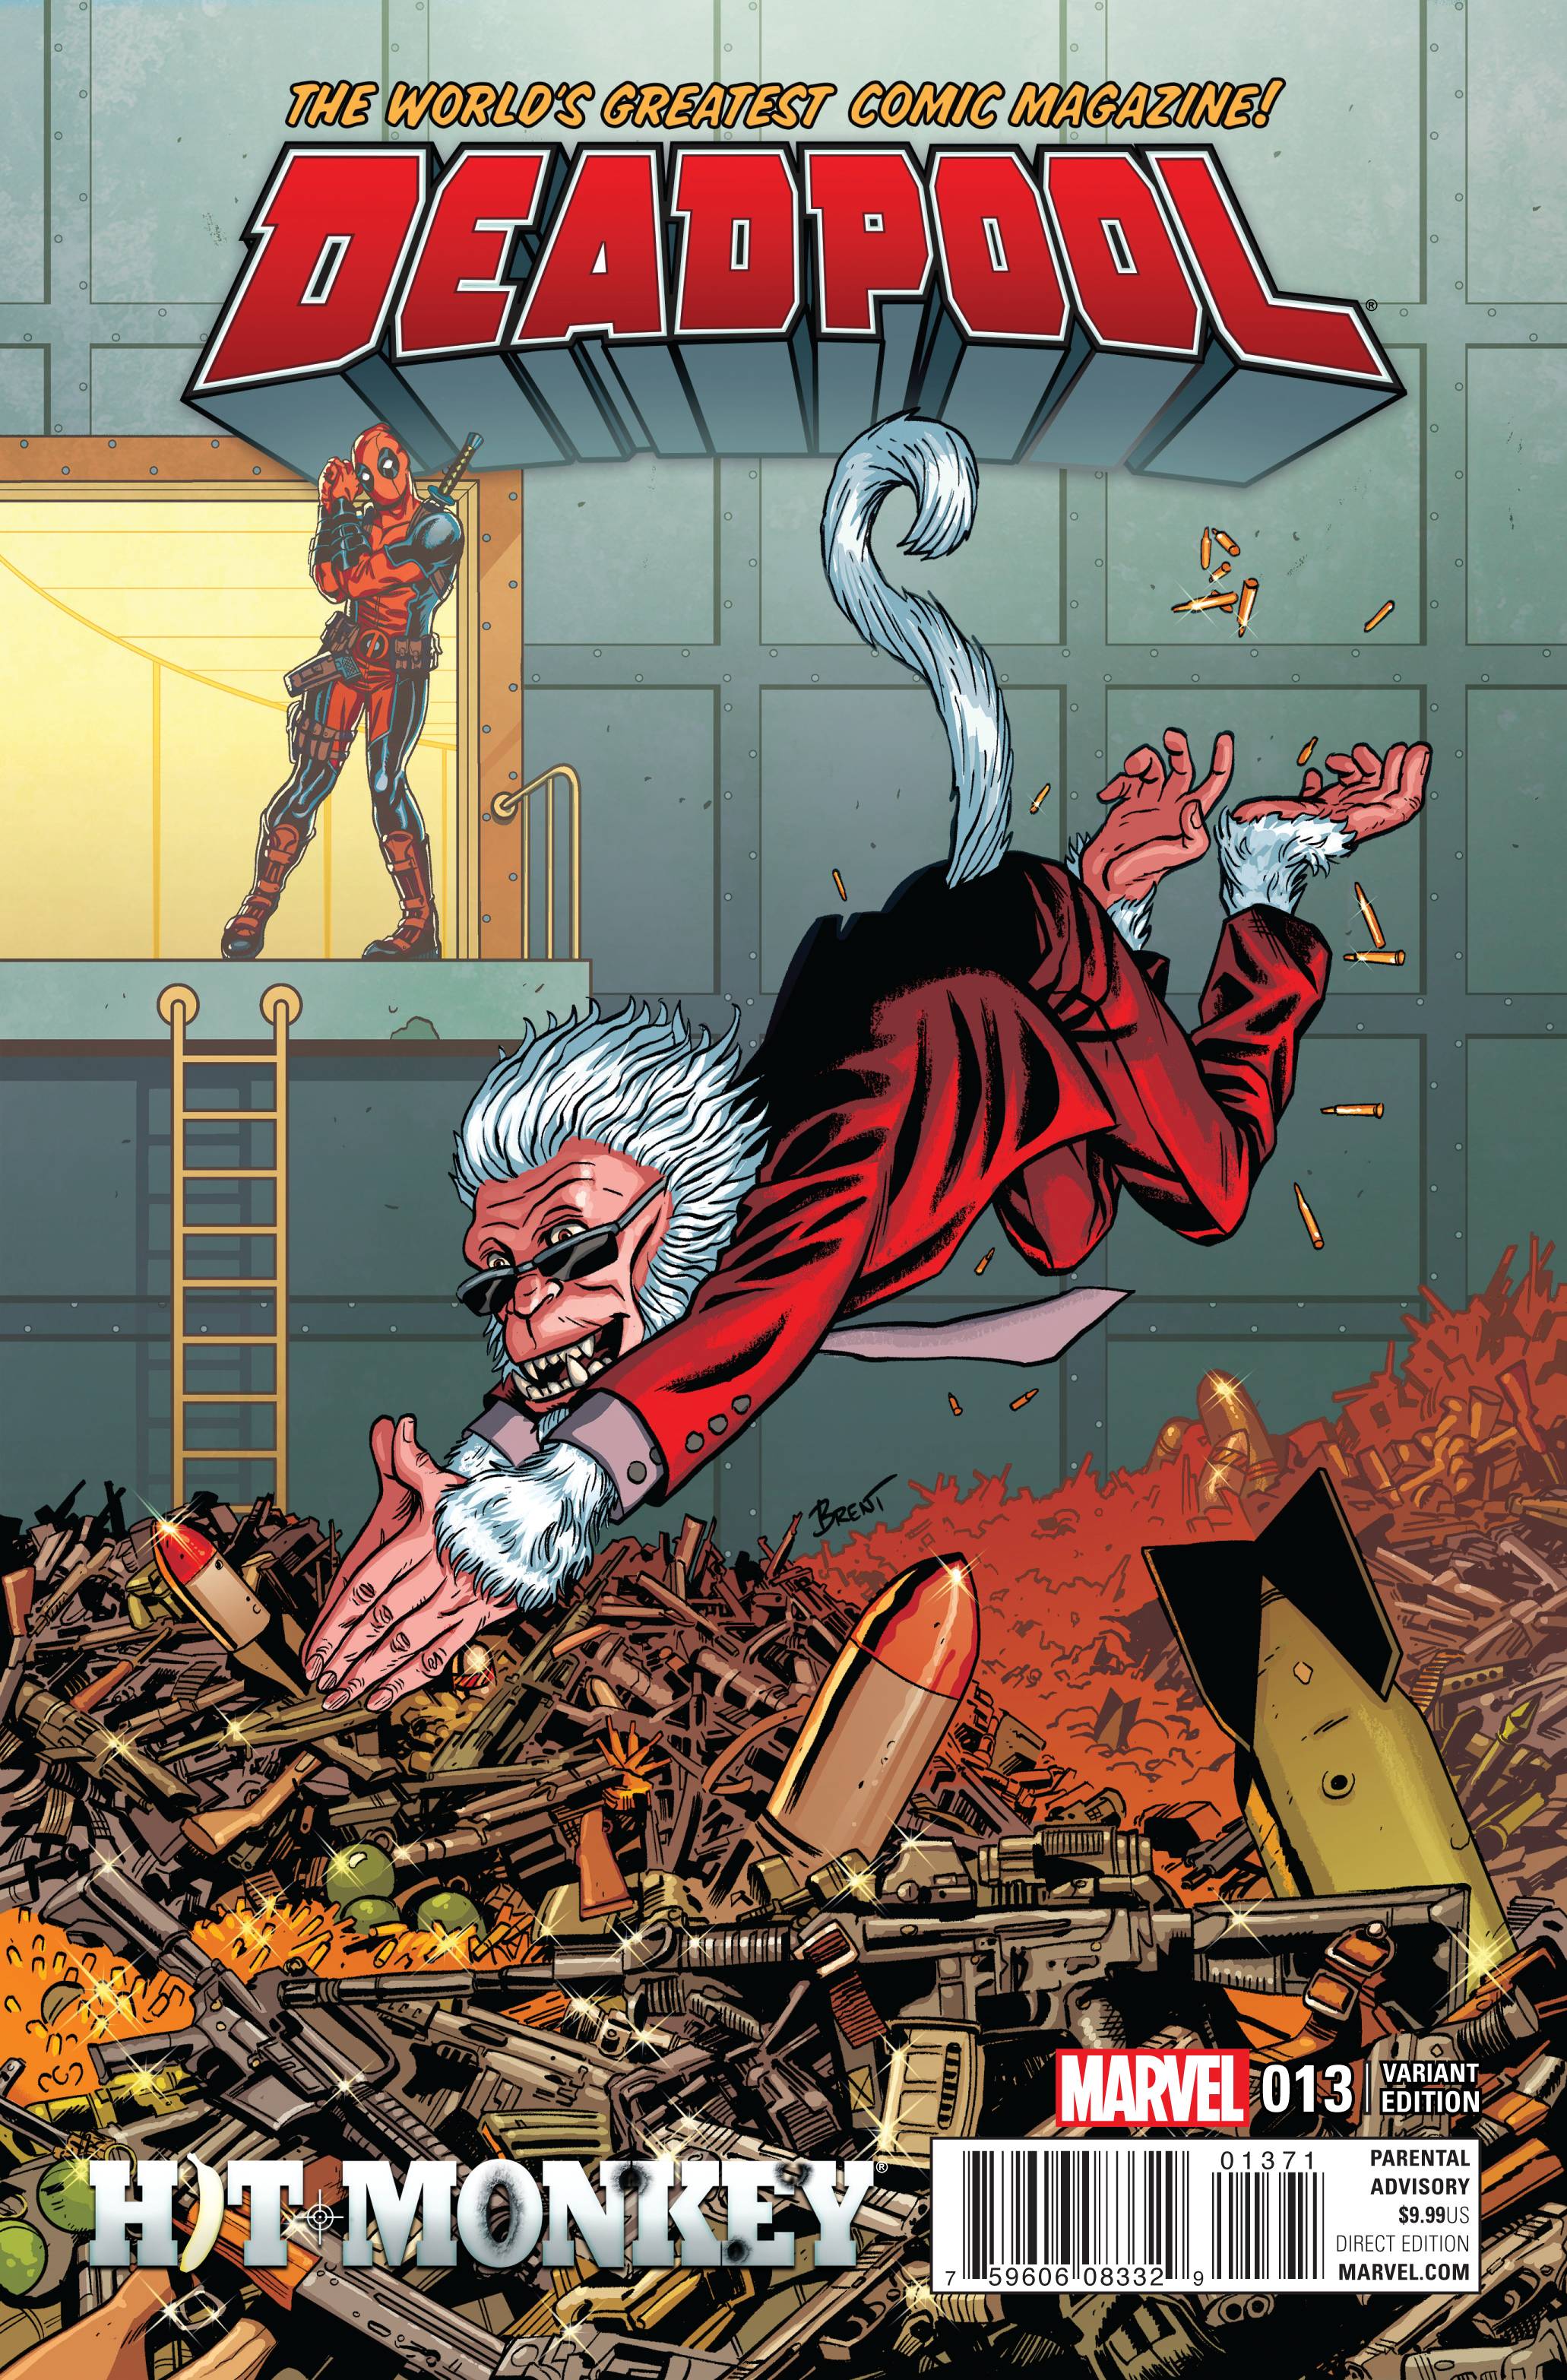 Deadpool #13 Add Hit Monkey Variant